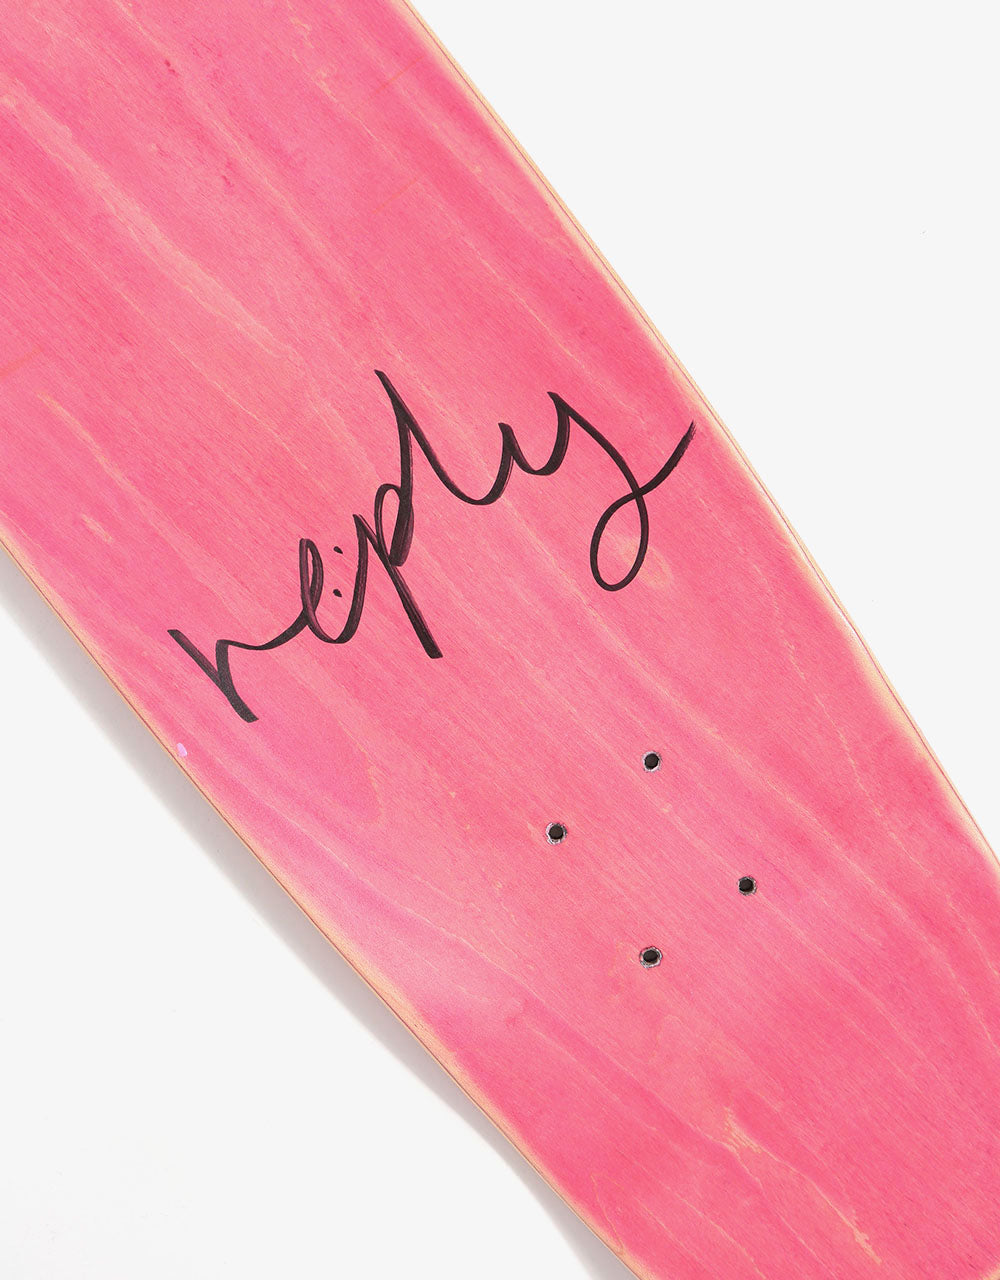 re:ply Tan Oak Skateboard Deck - 8.25" x 31"